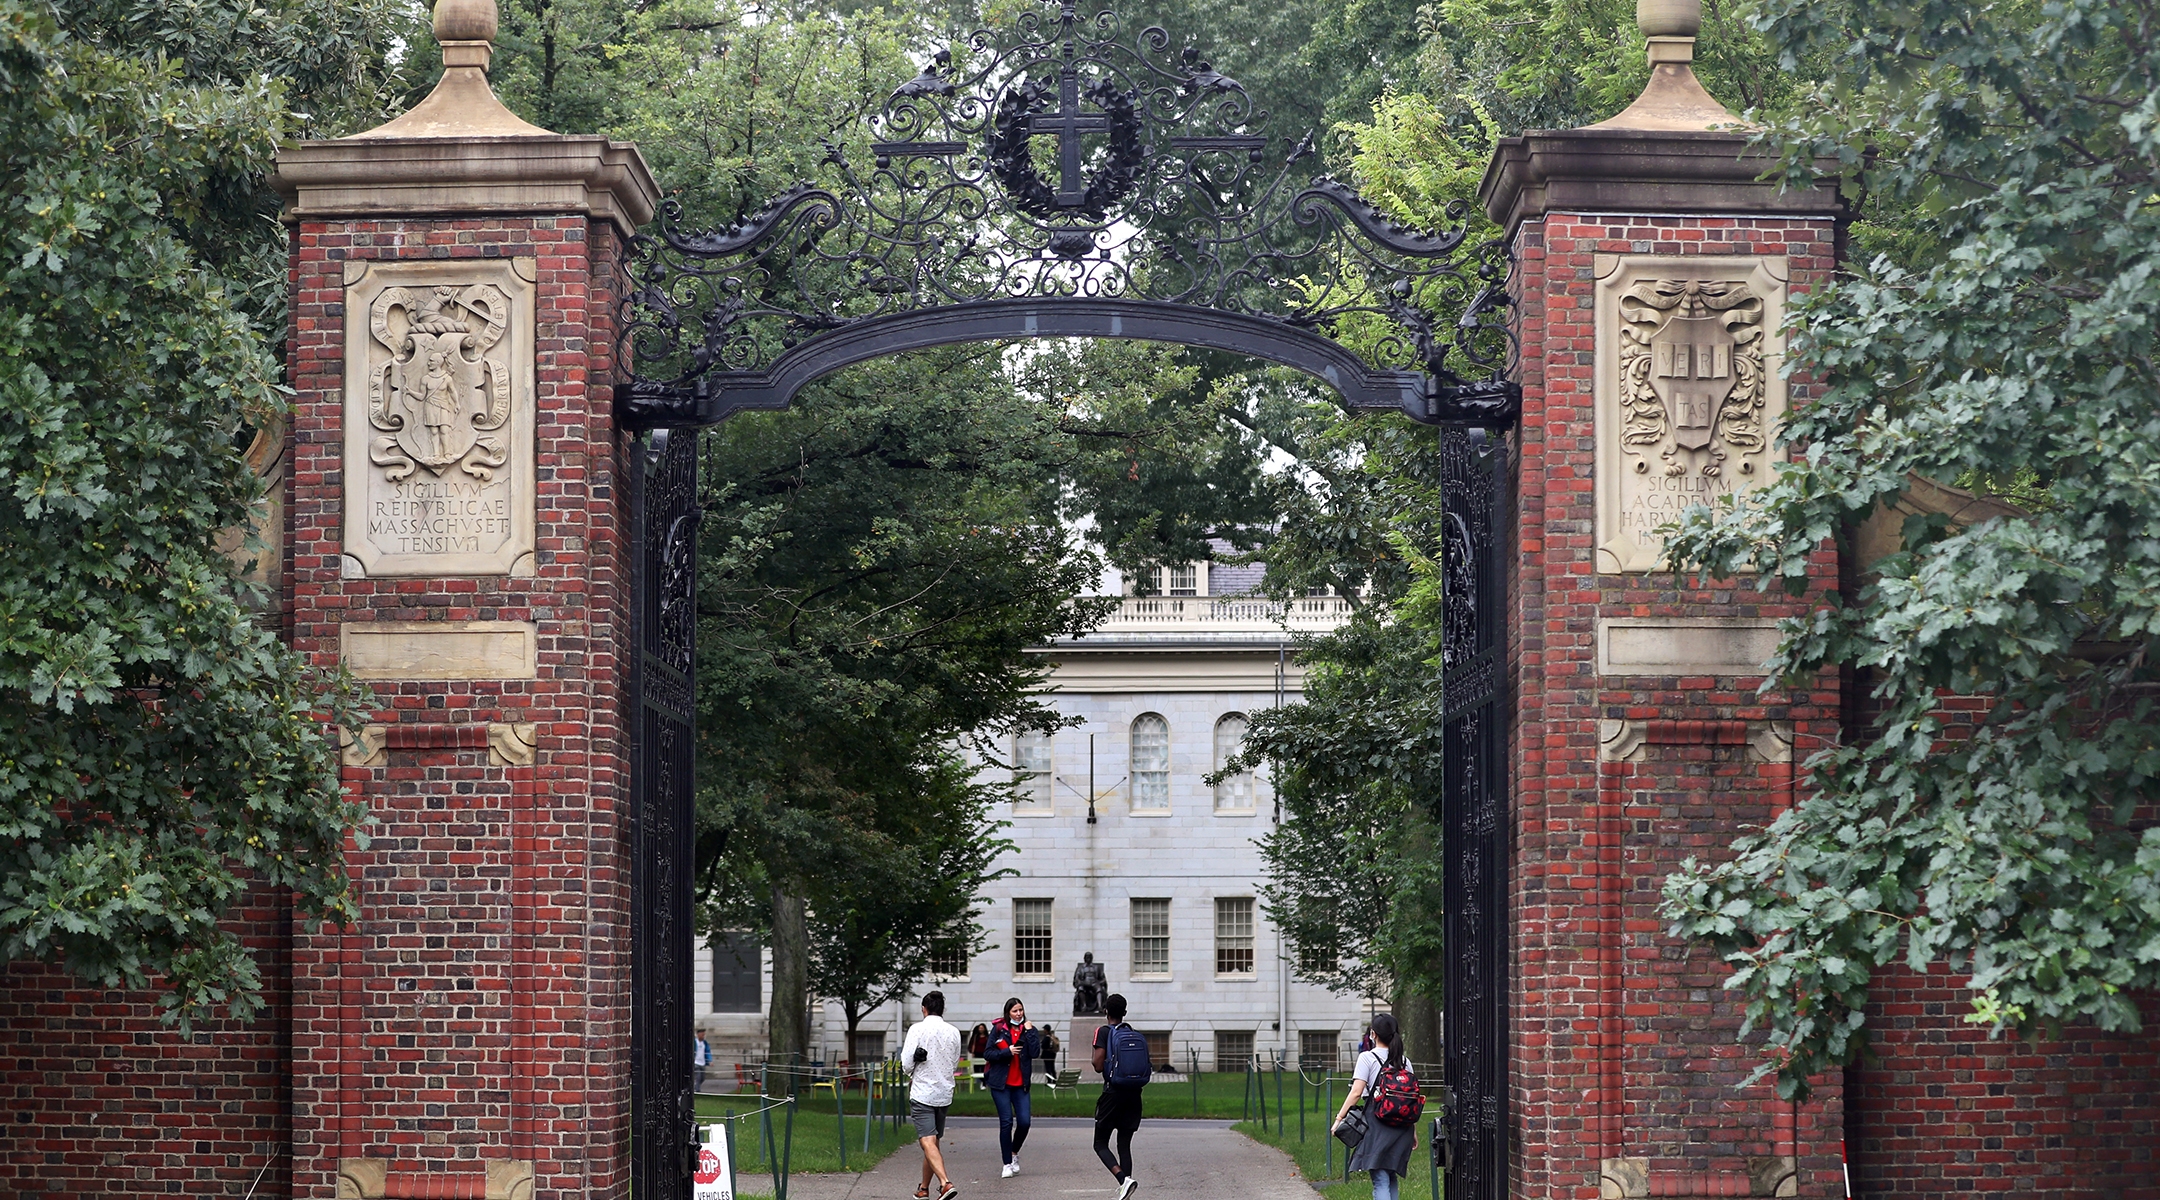 Students walk by the Harvard Yard gate in Cambridge, MA, Sep. 16, 2021. (David L. Ryan/The Boston Globe via Getty Images)